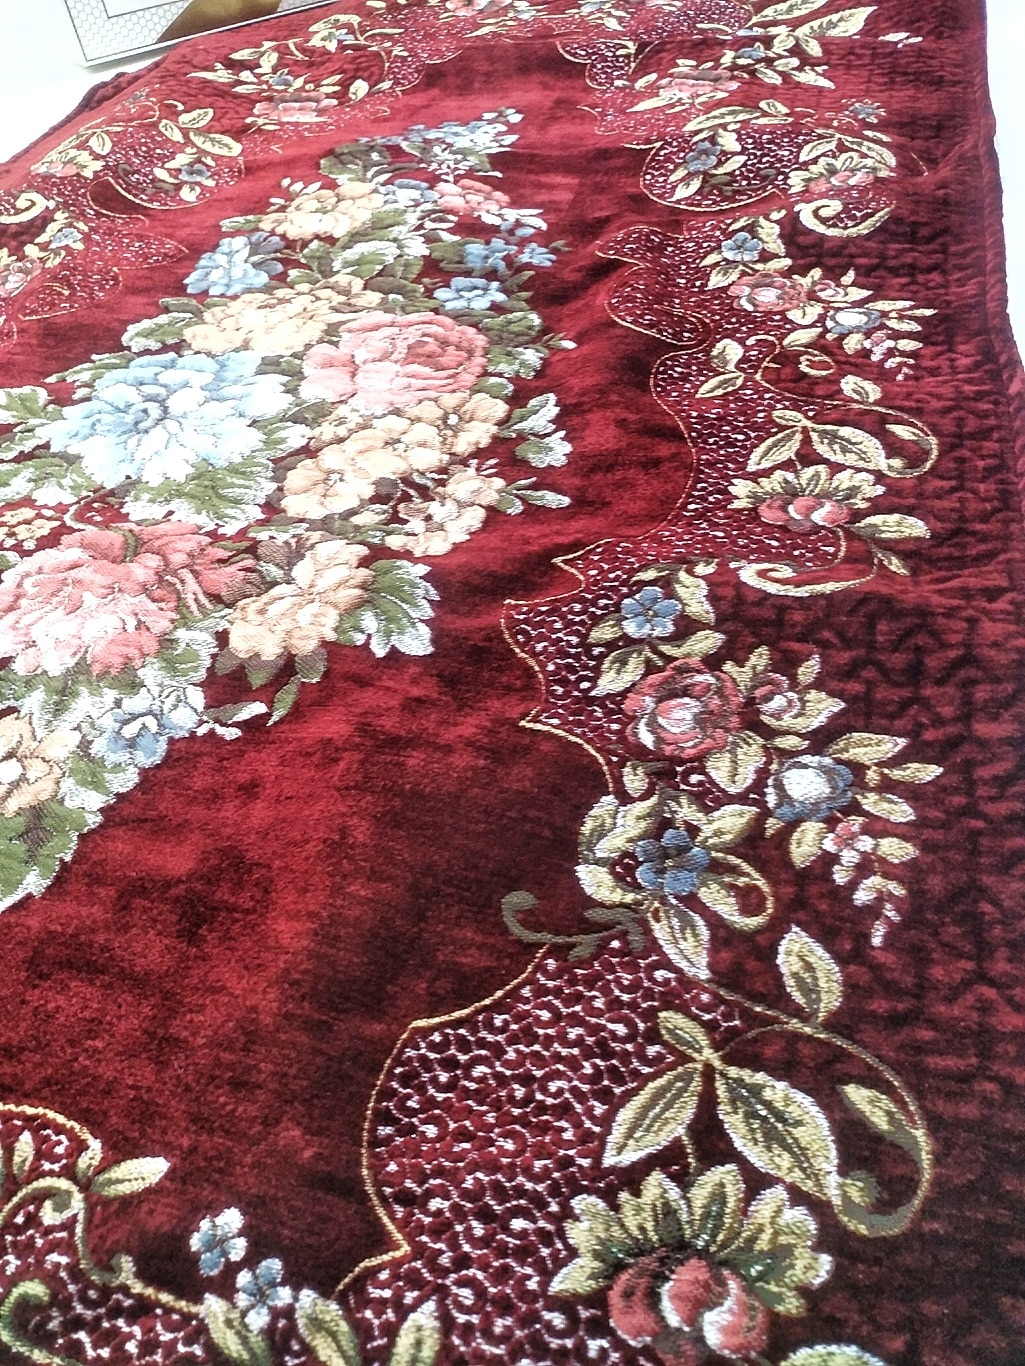 Thick Luxury Elegant Chenille Velvet Prayer Rug Umrah Hajj Islamic Muslim Gift Retail Worship Cover Qibla Cotton Lined Turkey